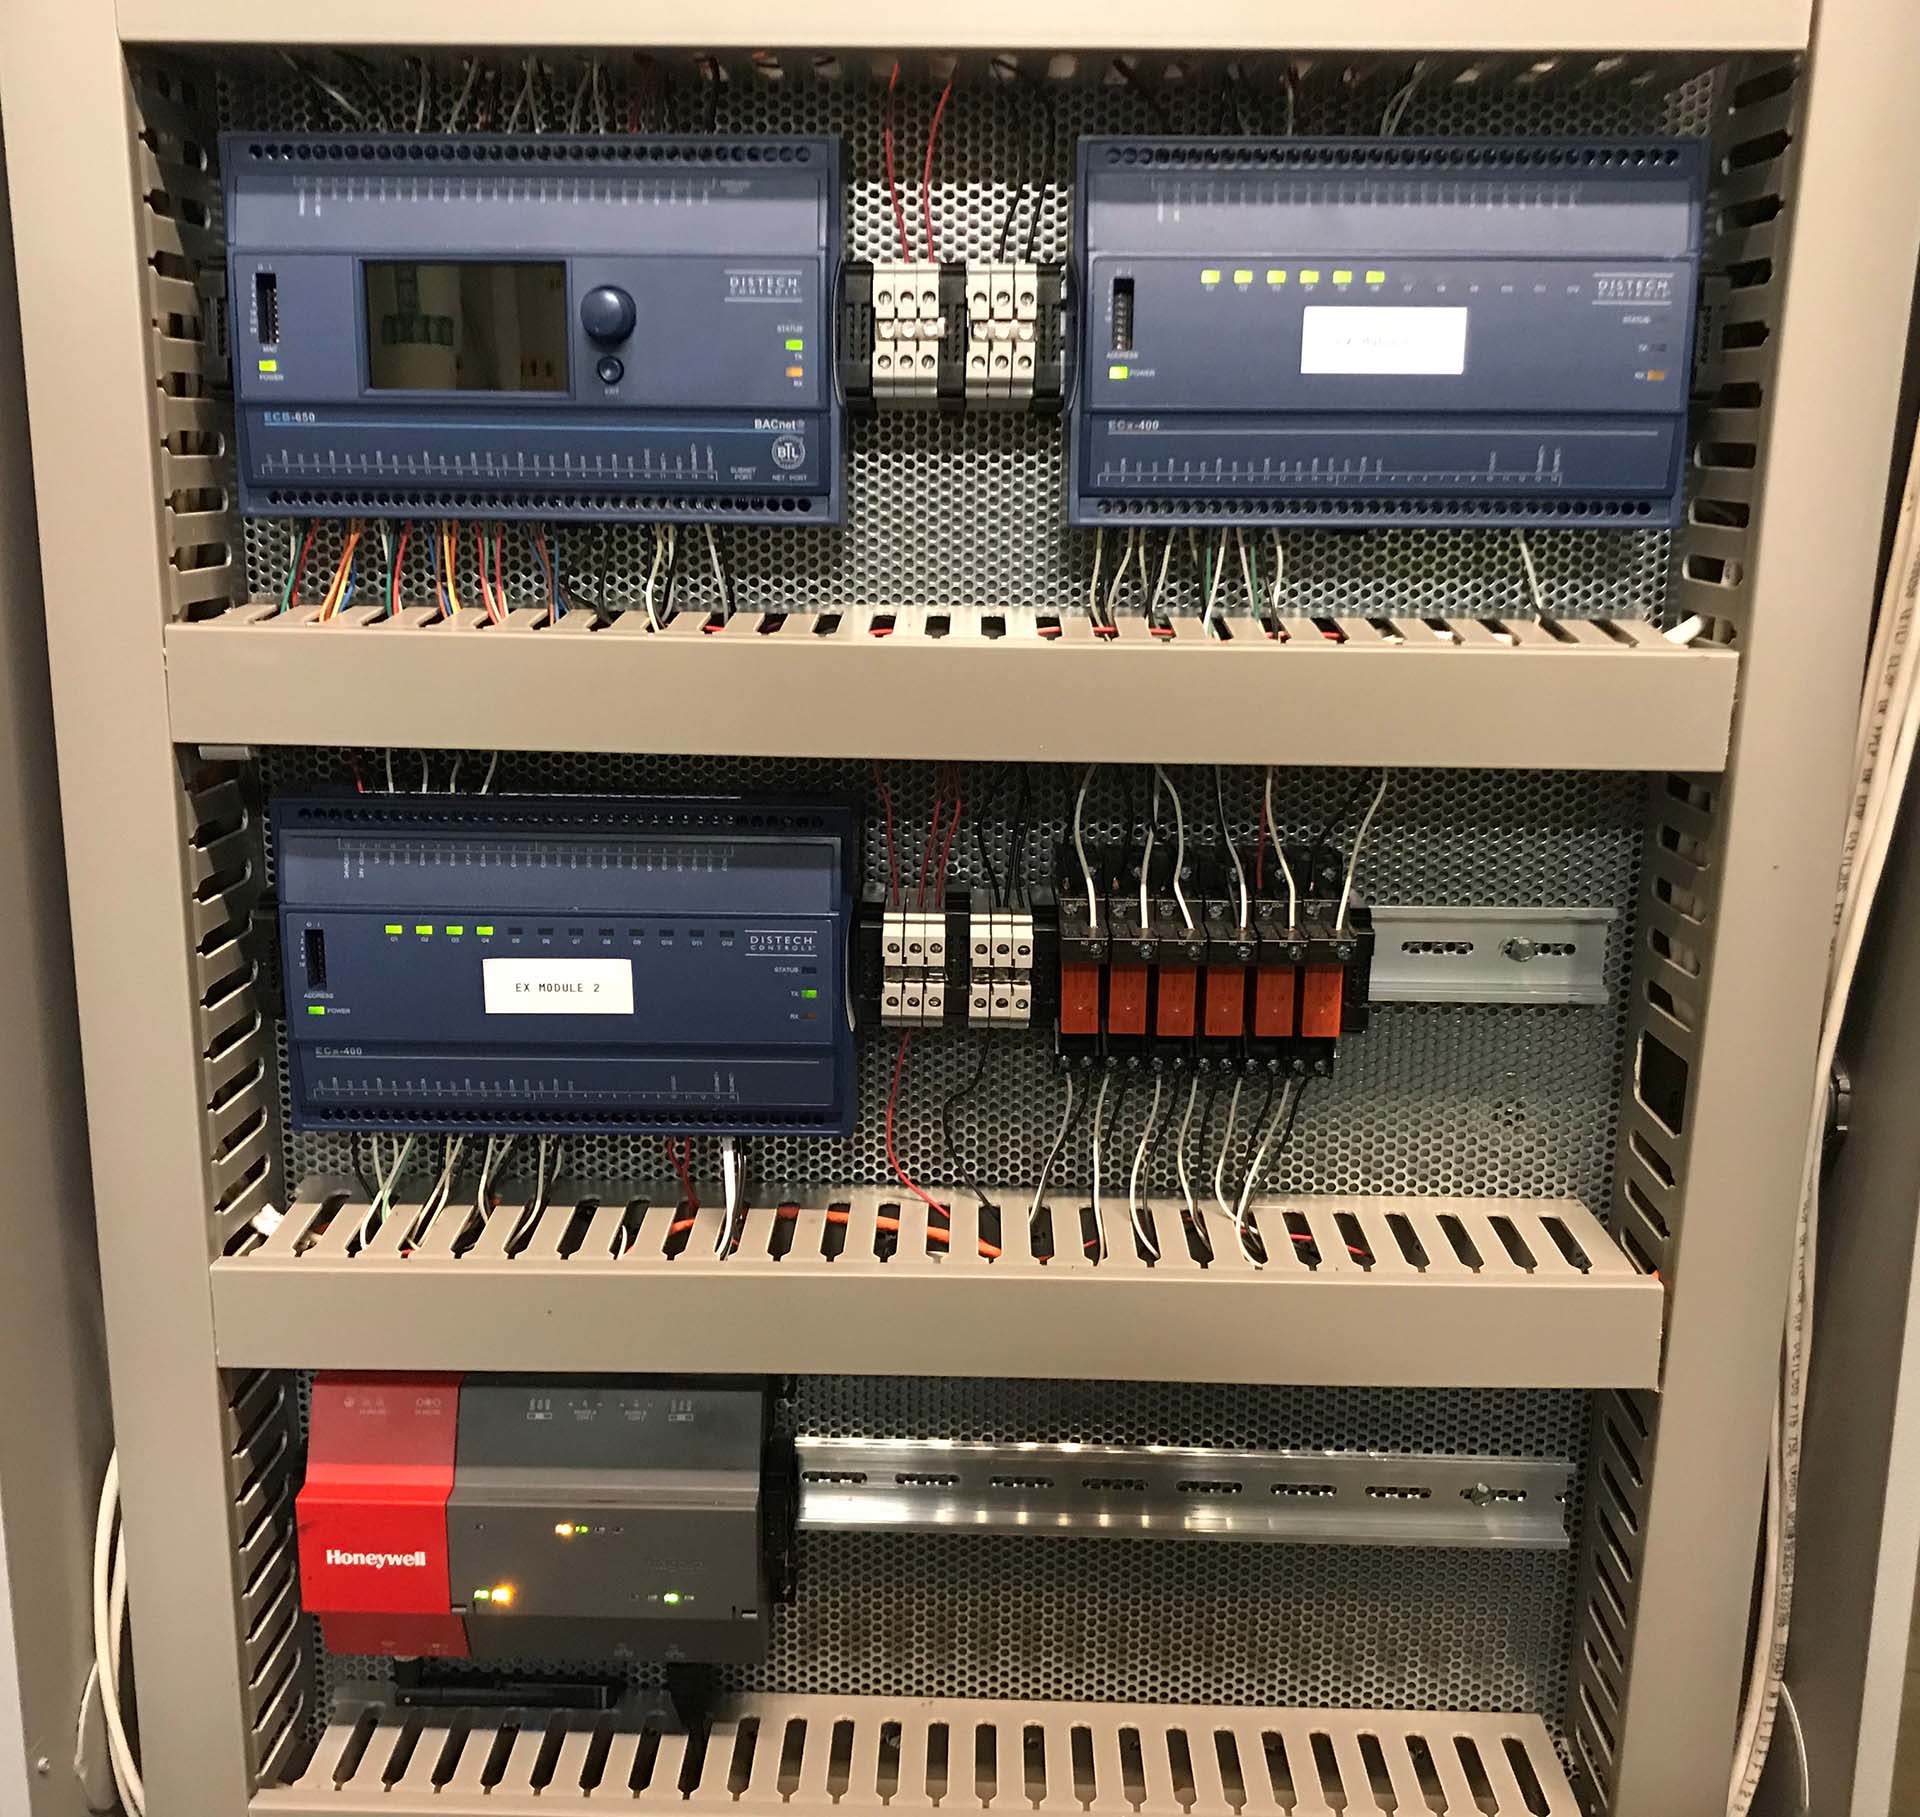 Neatly organized control box